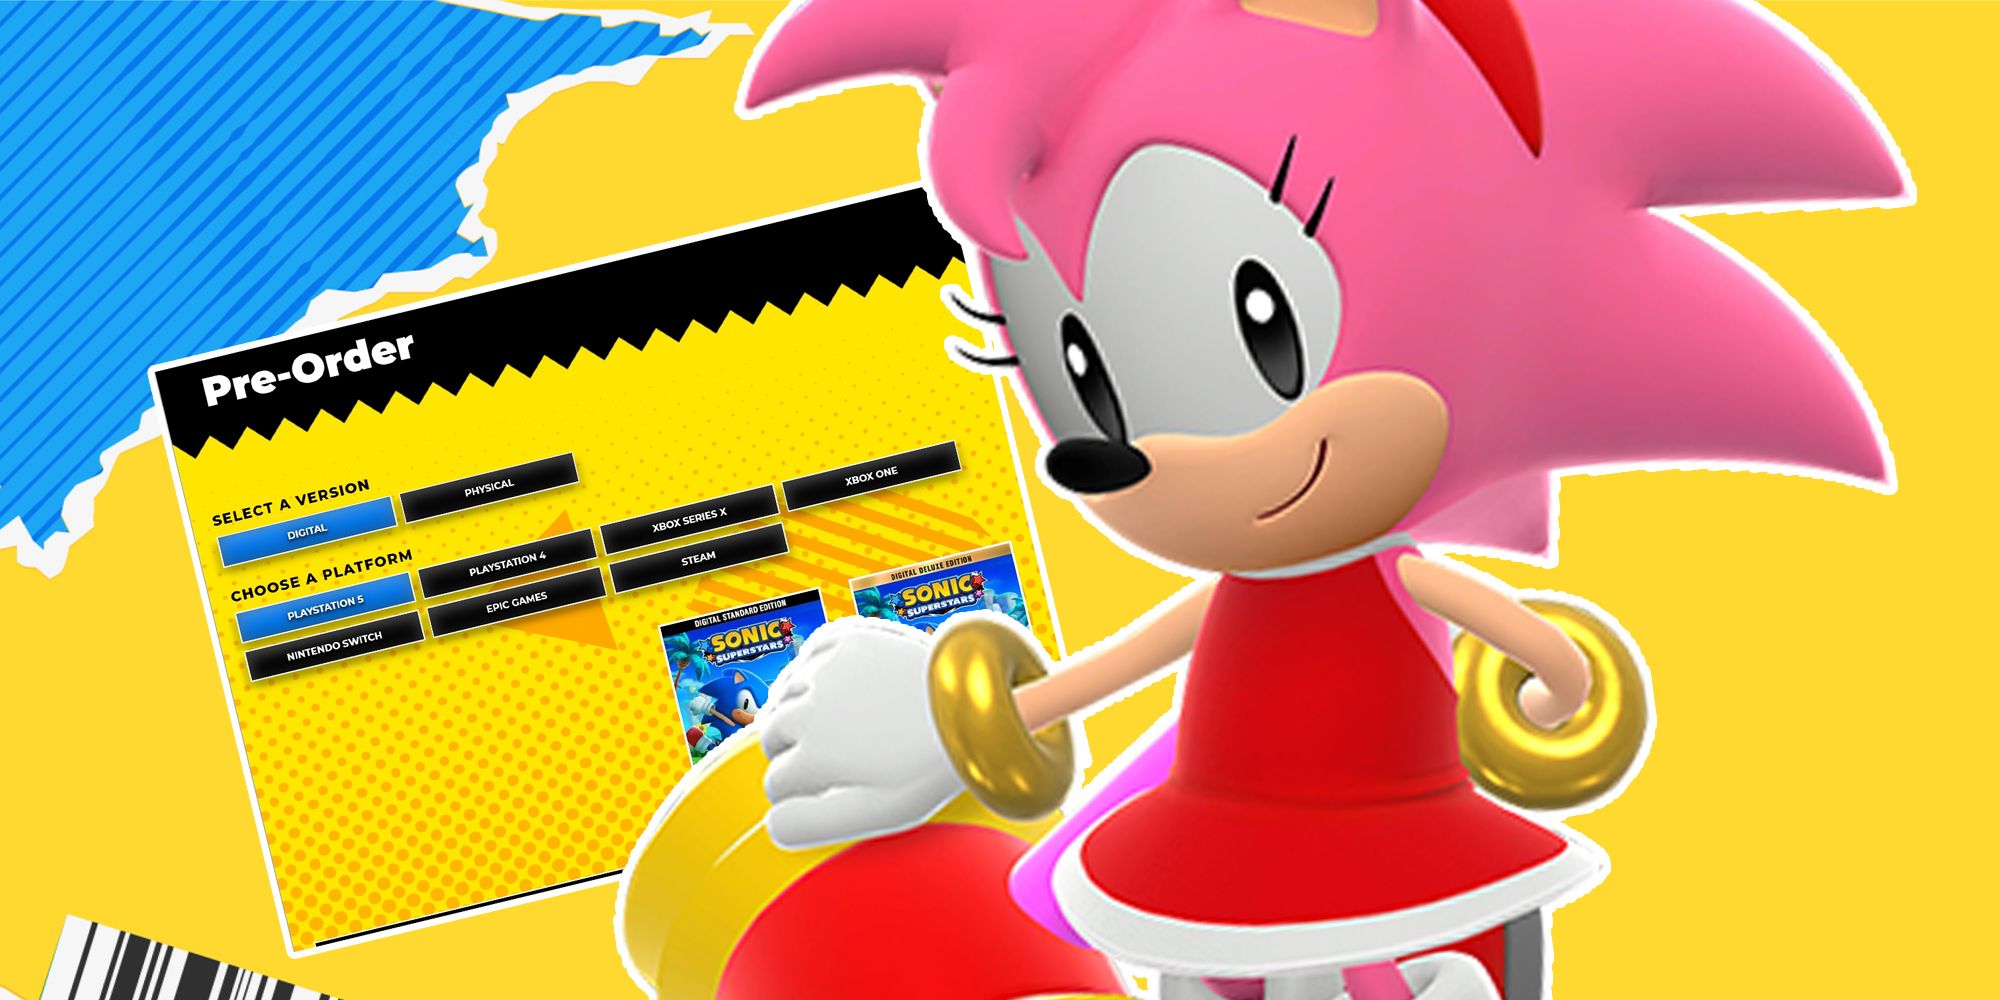 Sonic Superstars - Nintendo Switch : Target